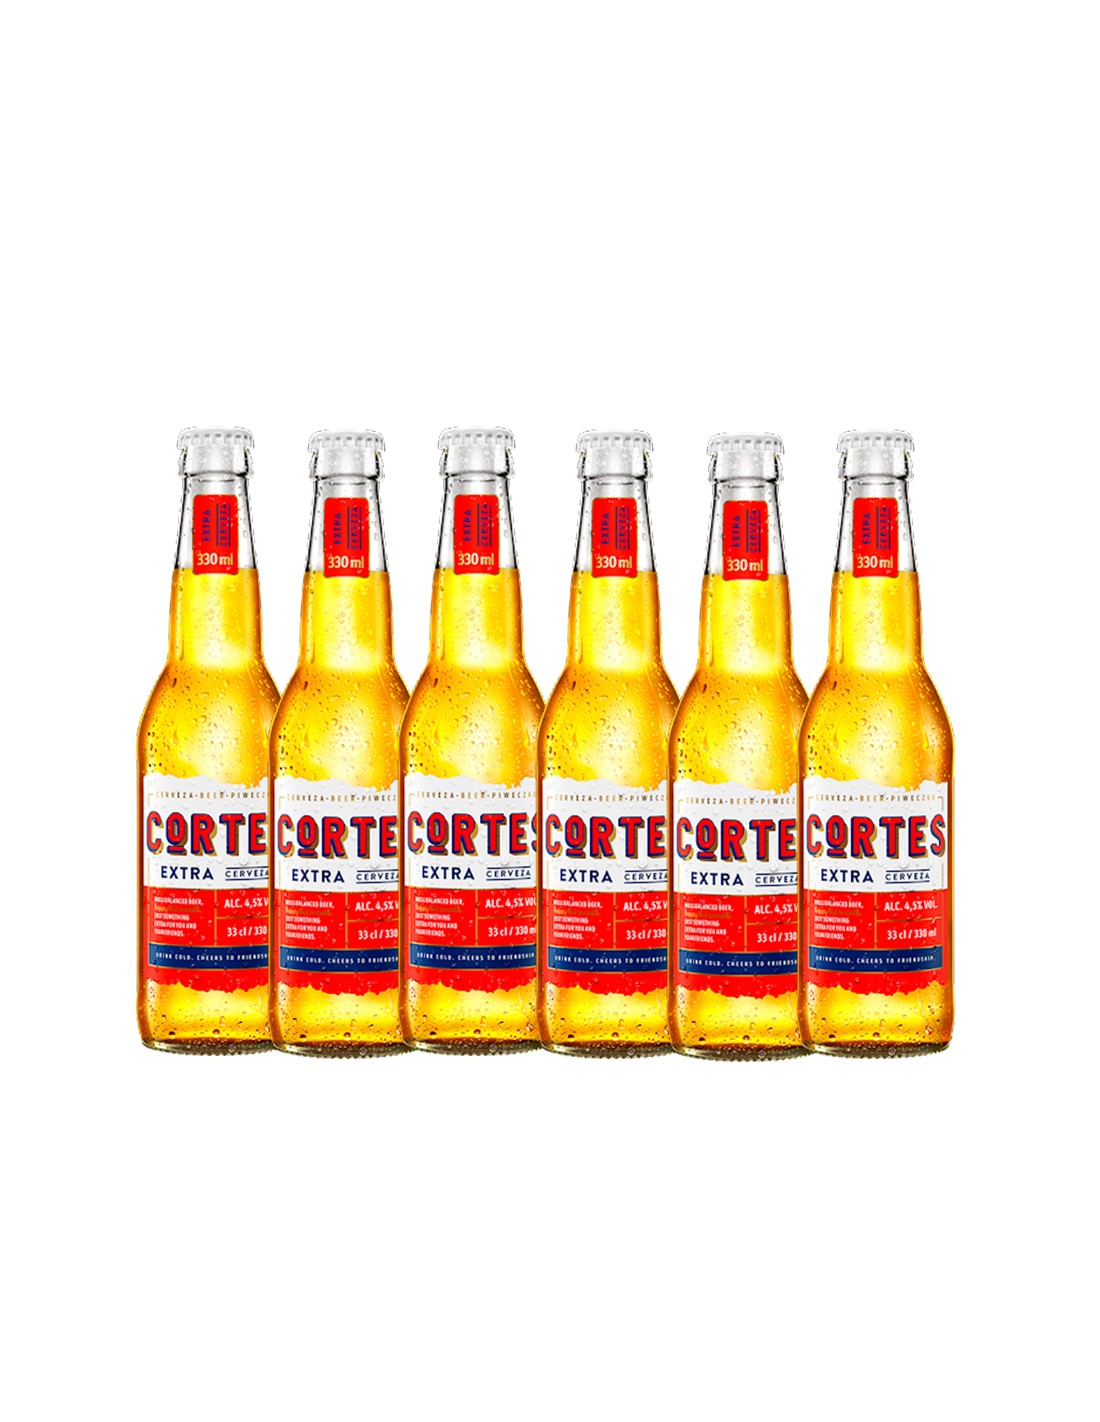 Pachet 6 bucati bere blonda, filtrata Cortes Extra, 4.5% alc., 0.33L, Polonia alcooldiscount.ro